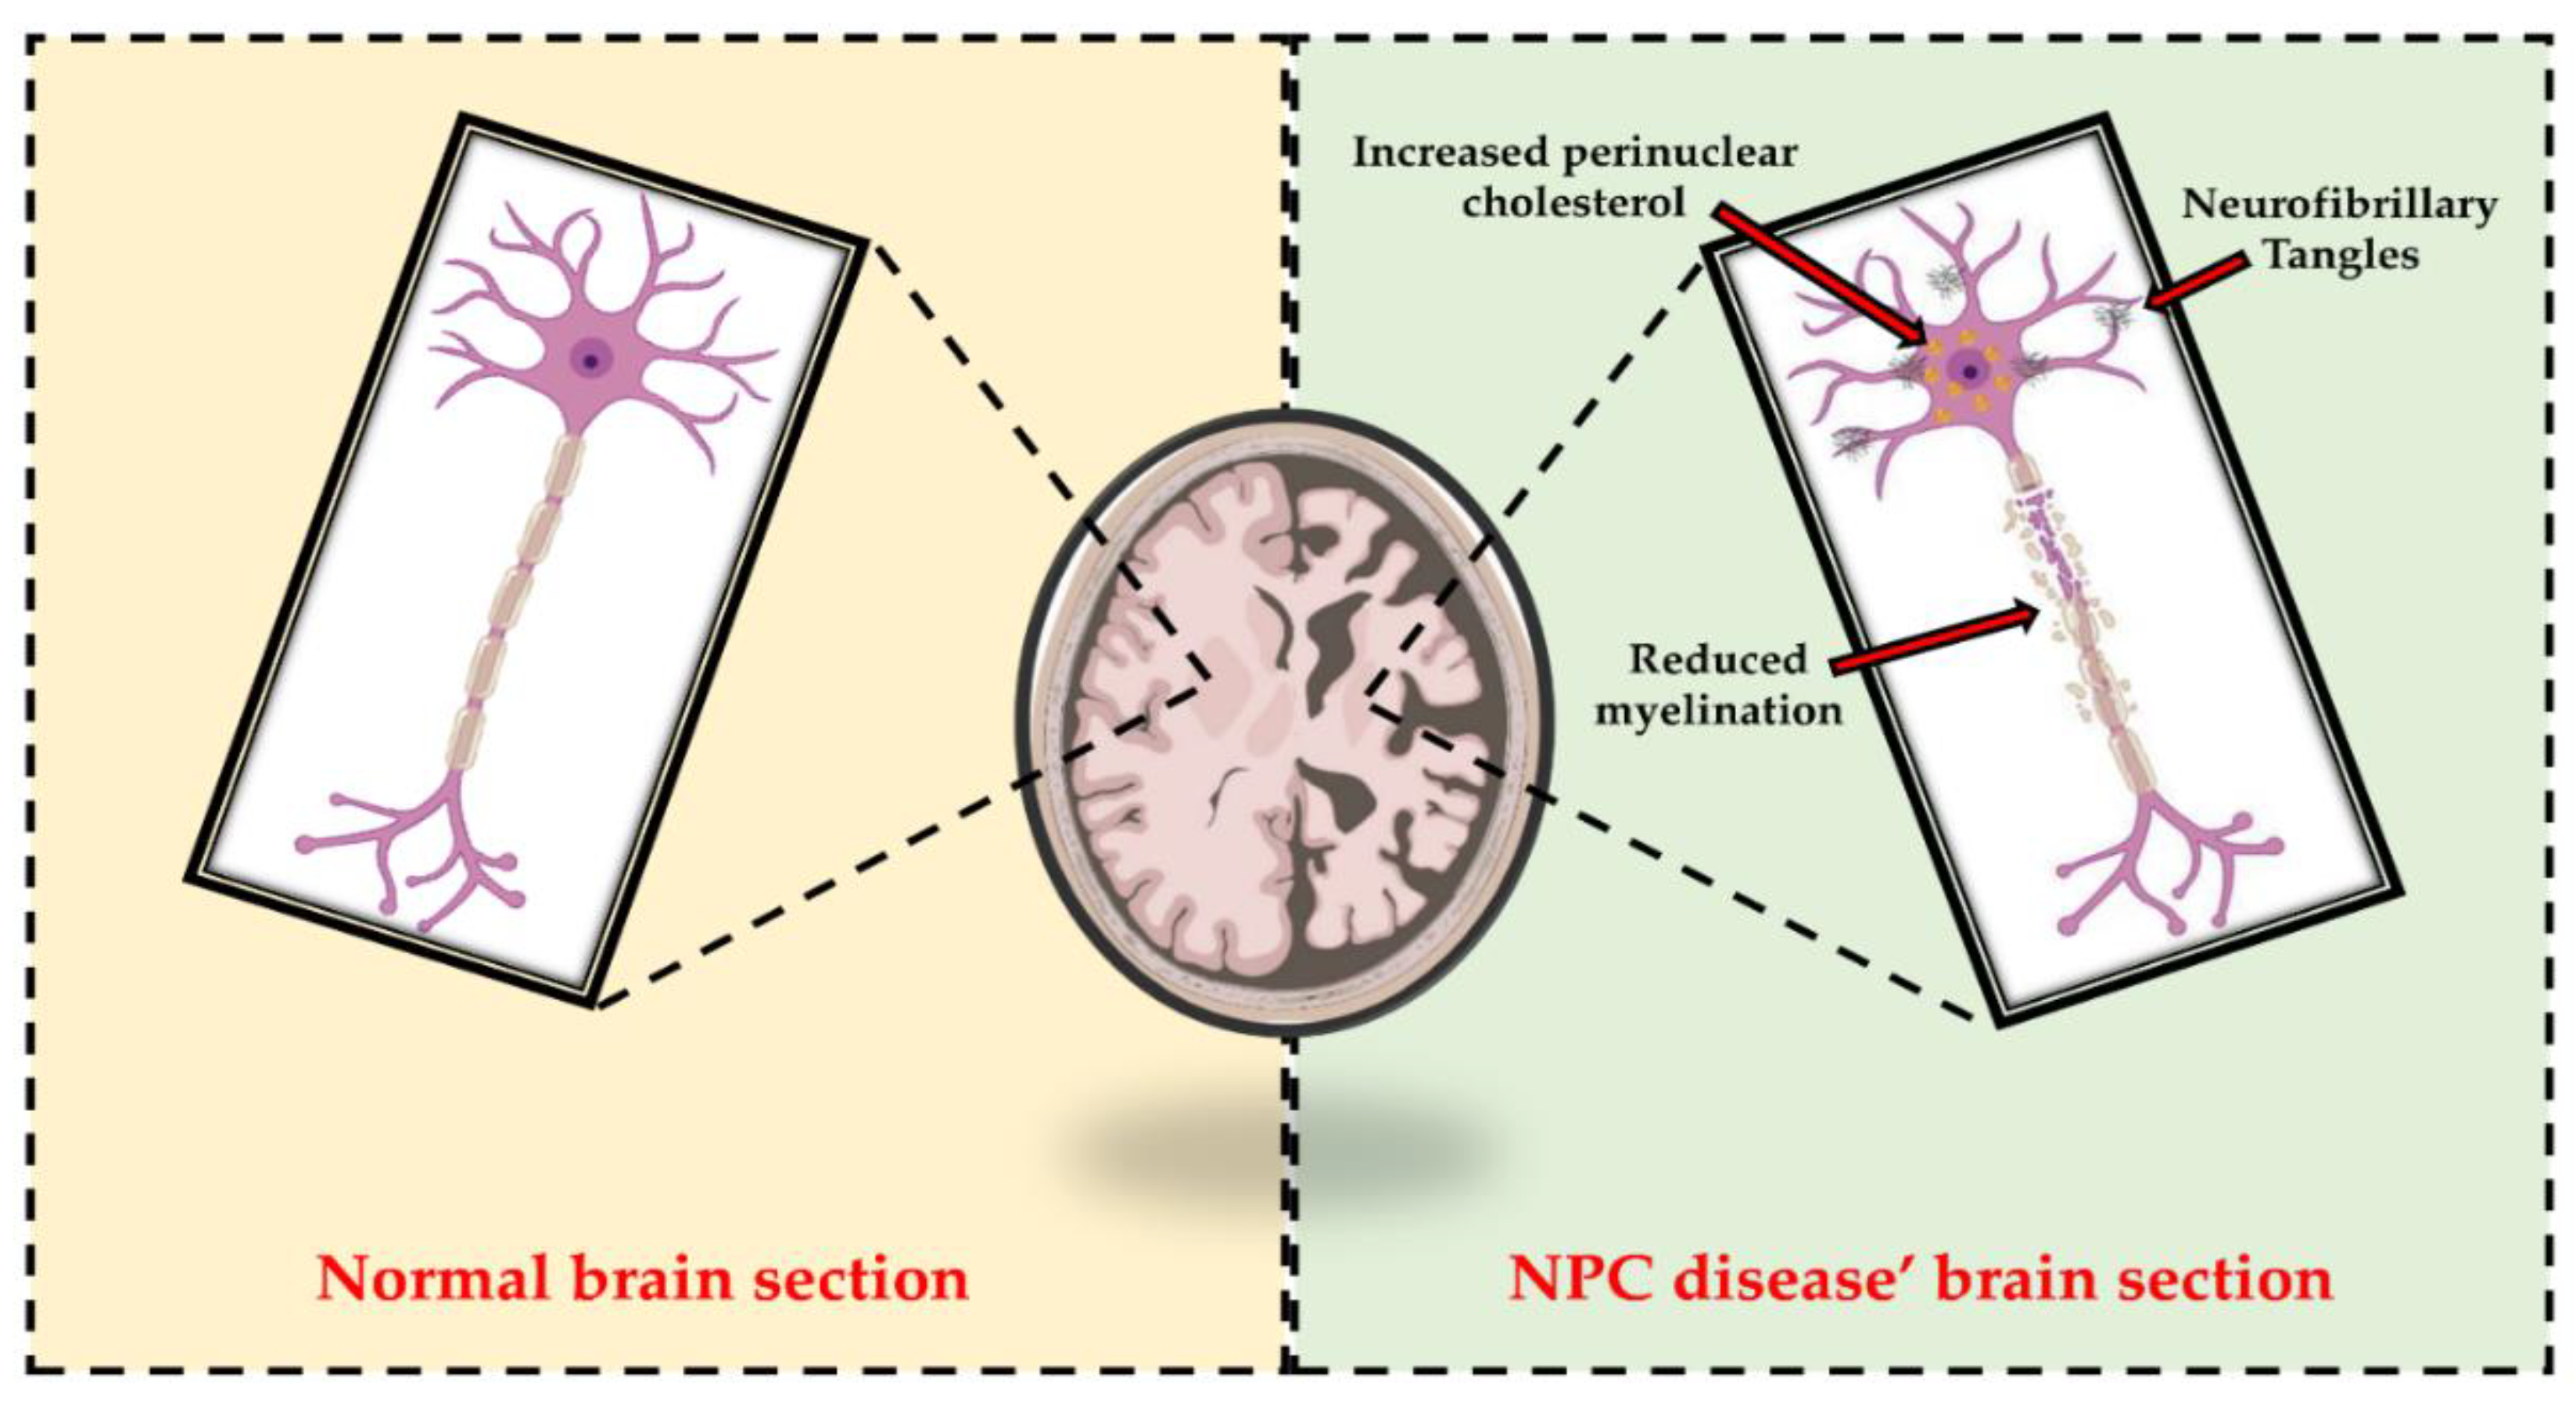 Experimental treatment for Niemann-Pick disease appears safe